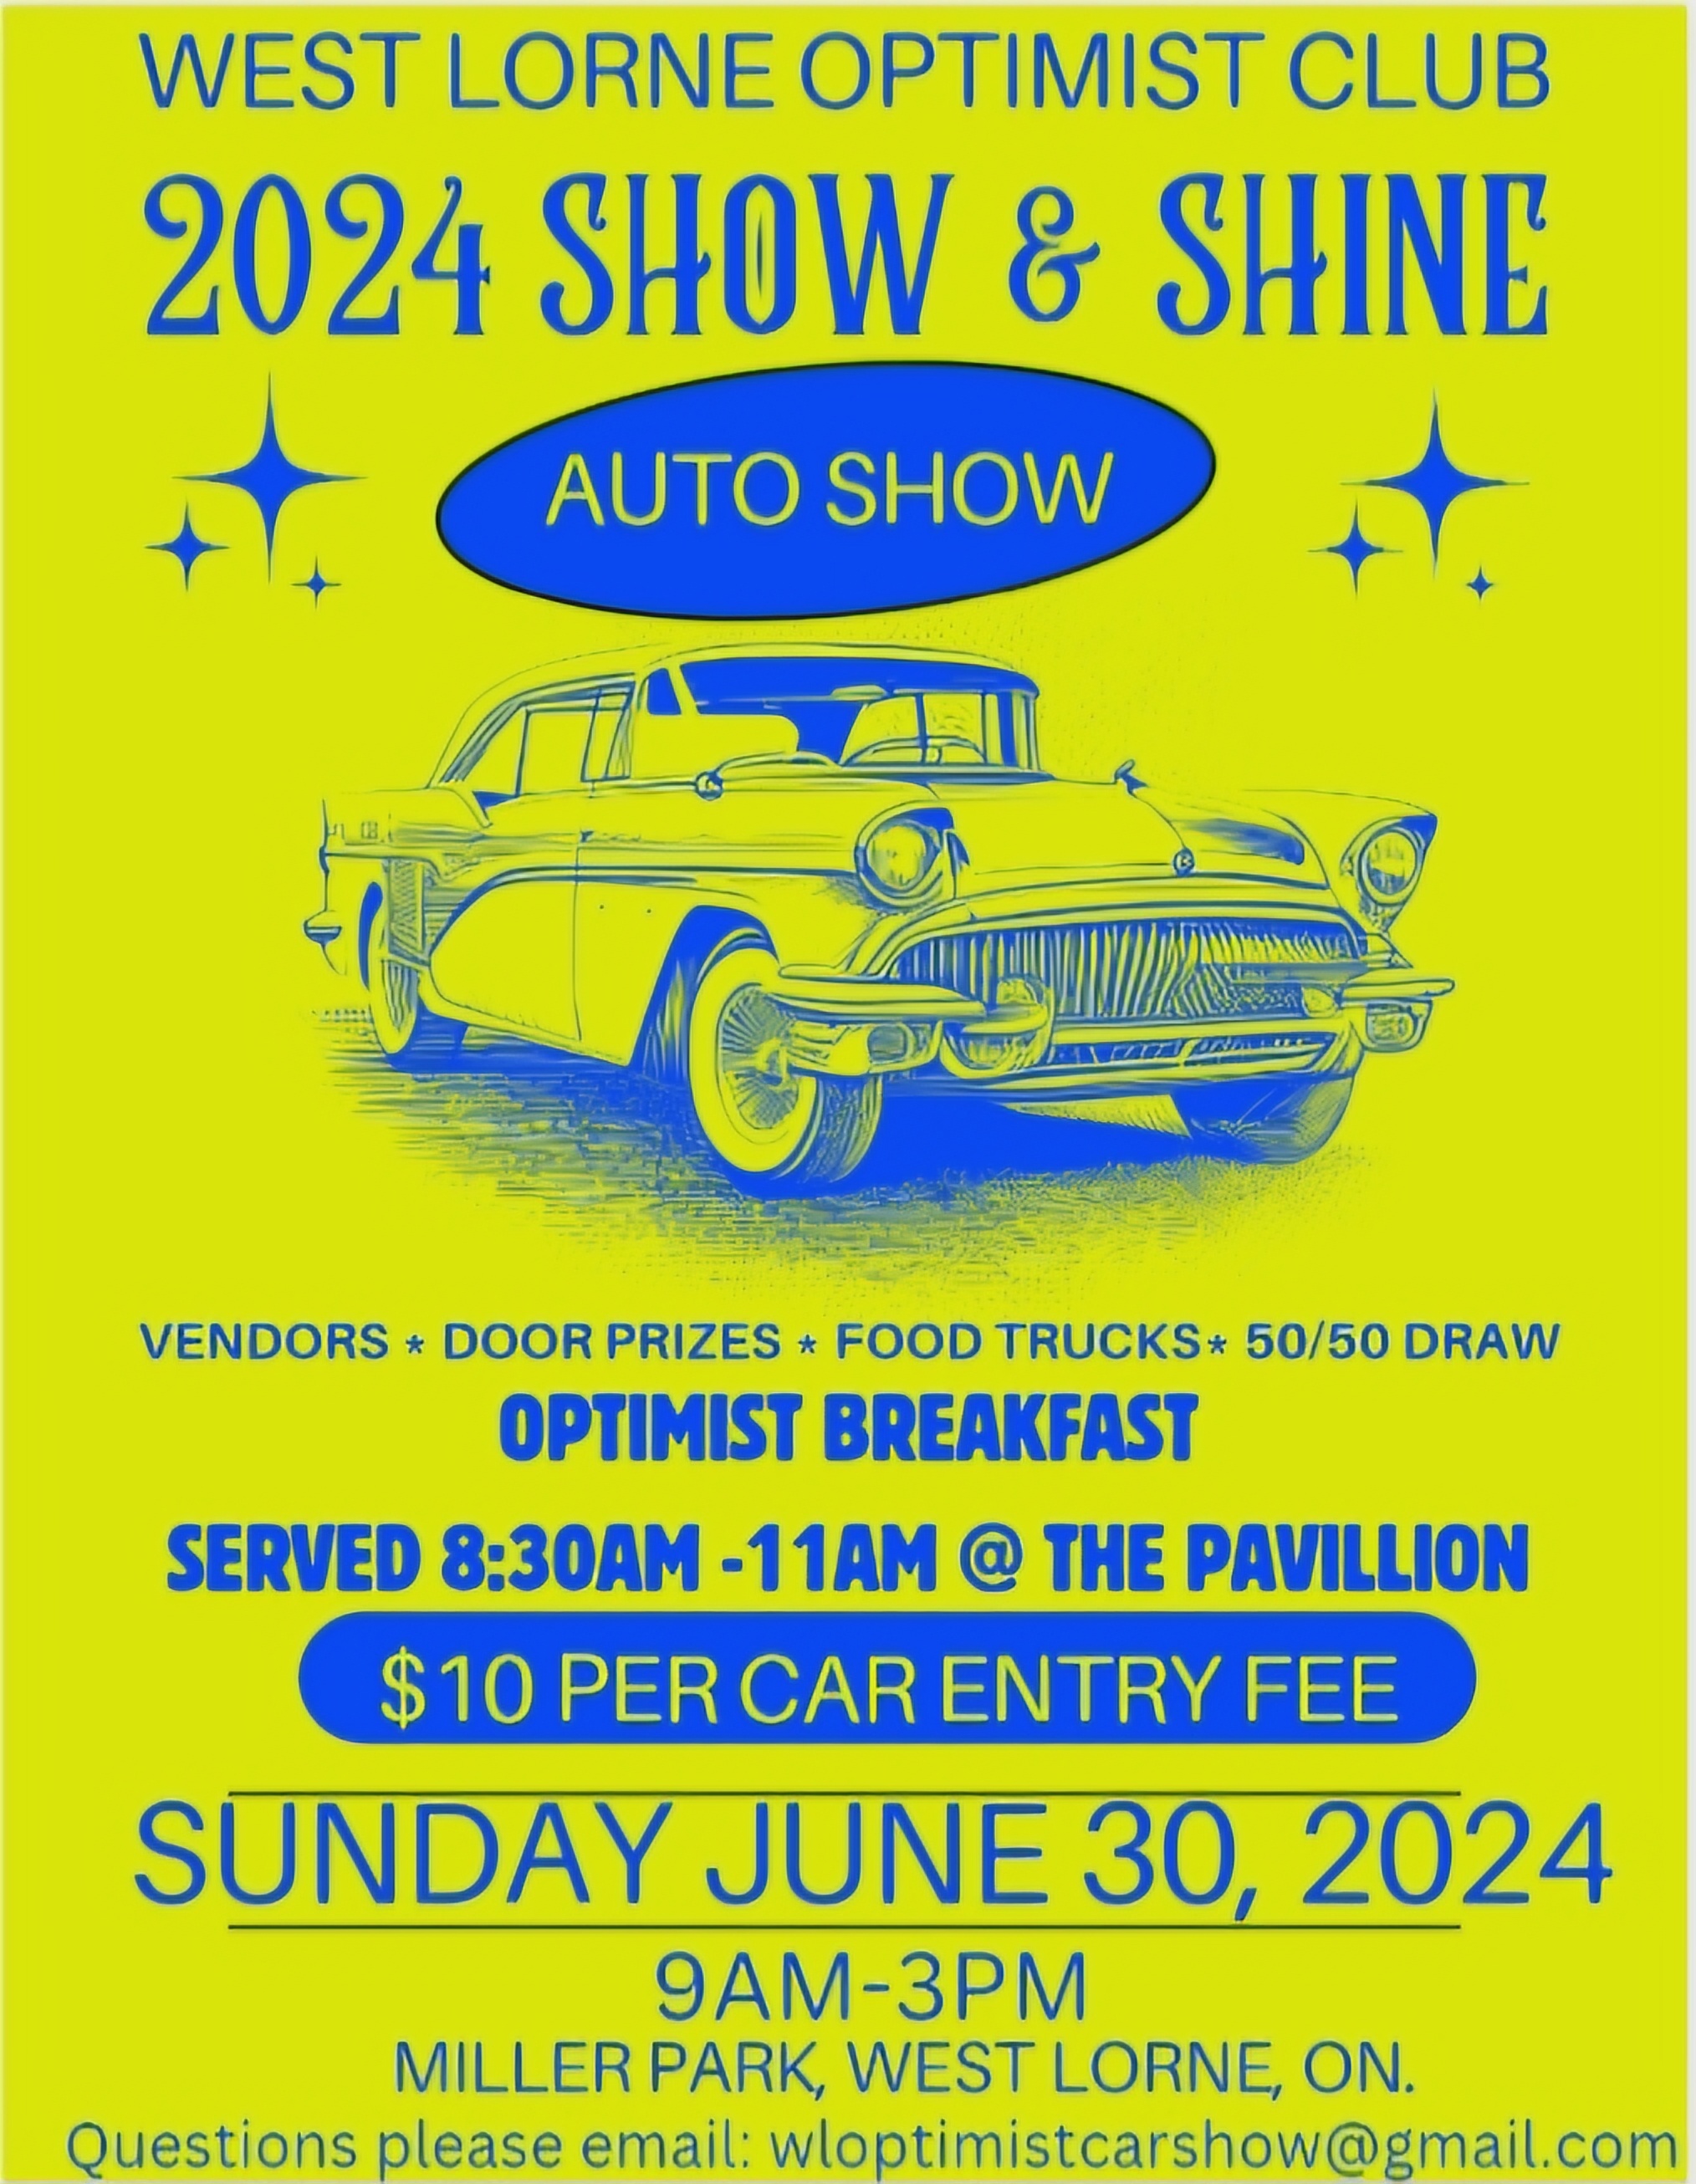 Show & Shine Auto Show